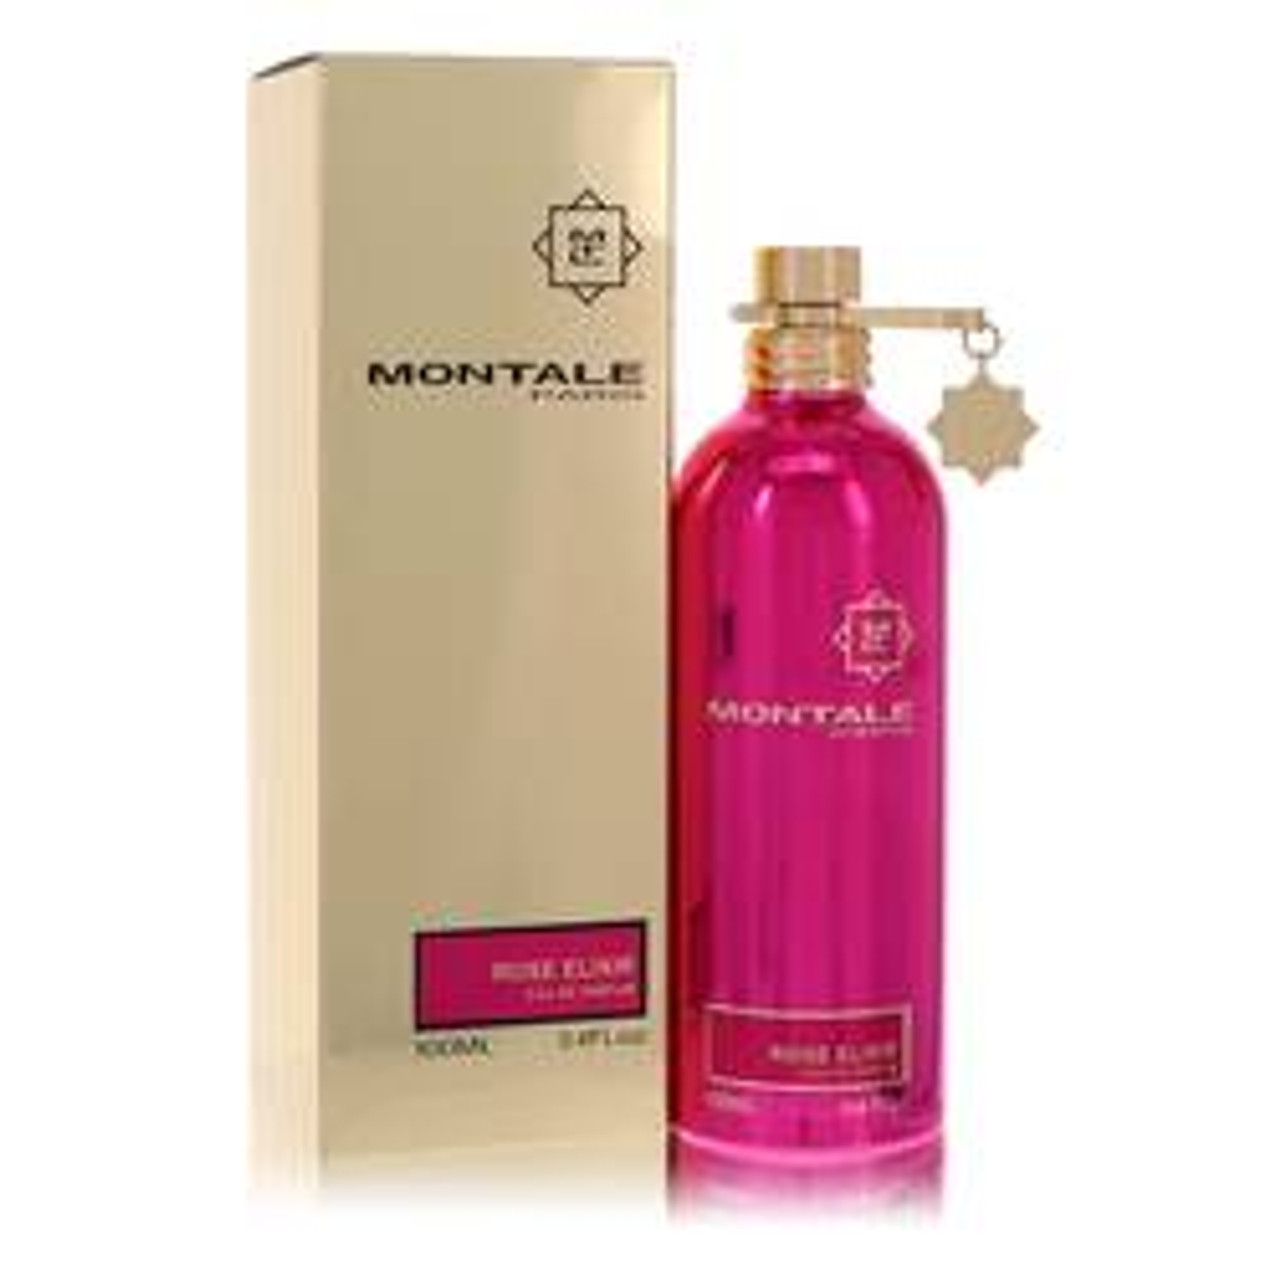 Montale Rose Elixir Perfume By Montale Eau De Parfum Spray 3.4 oz for Women - *Pre-Order